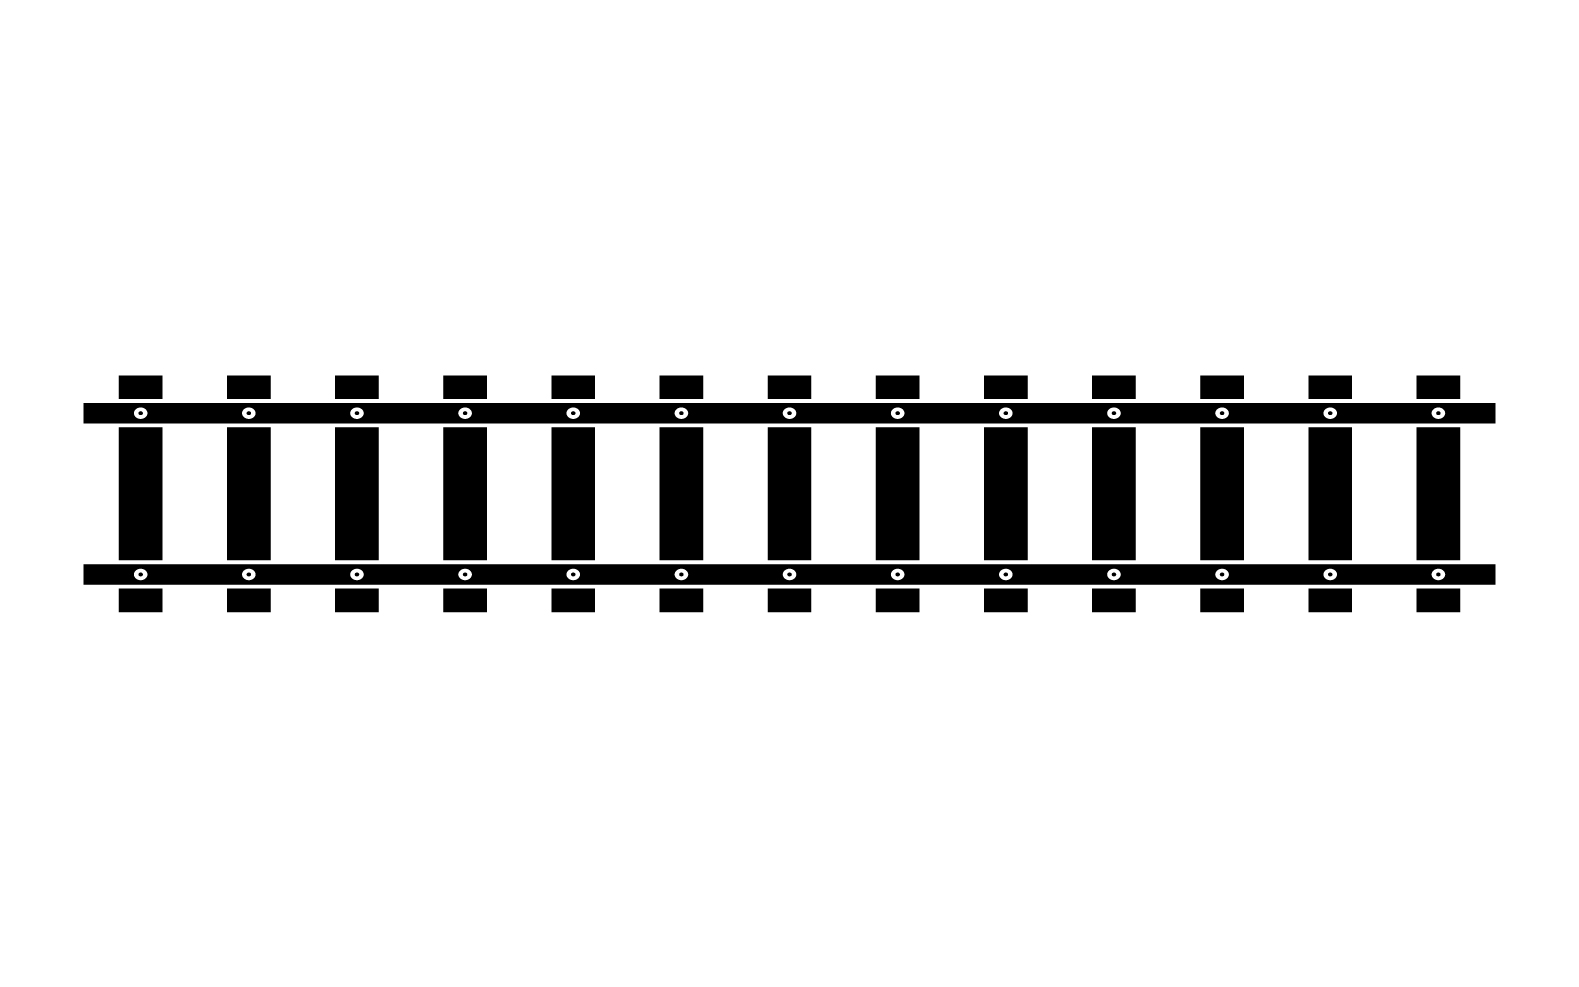 Train tracks vector logo design v15